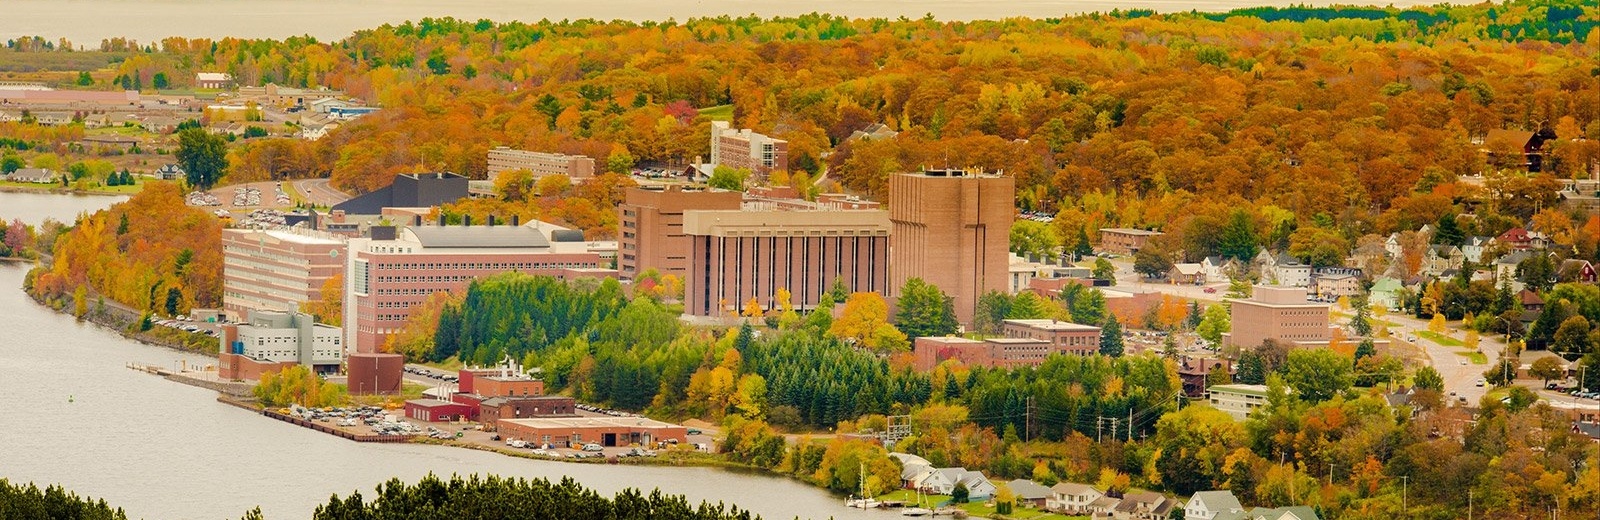 Michigan Tech's campus in the fall